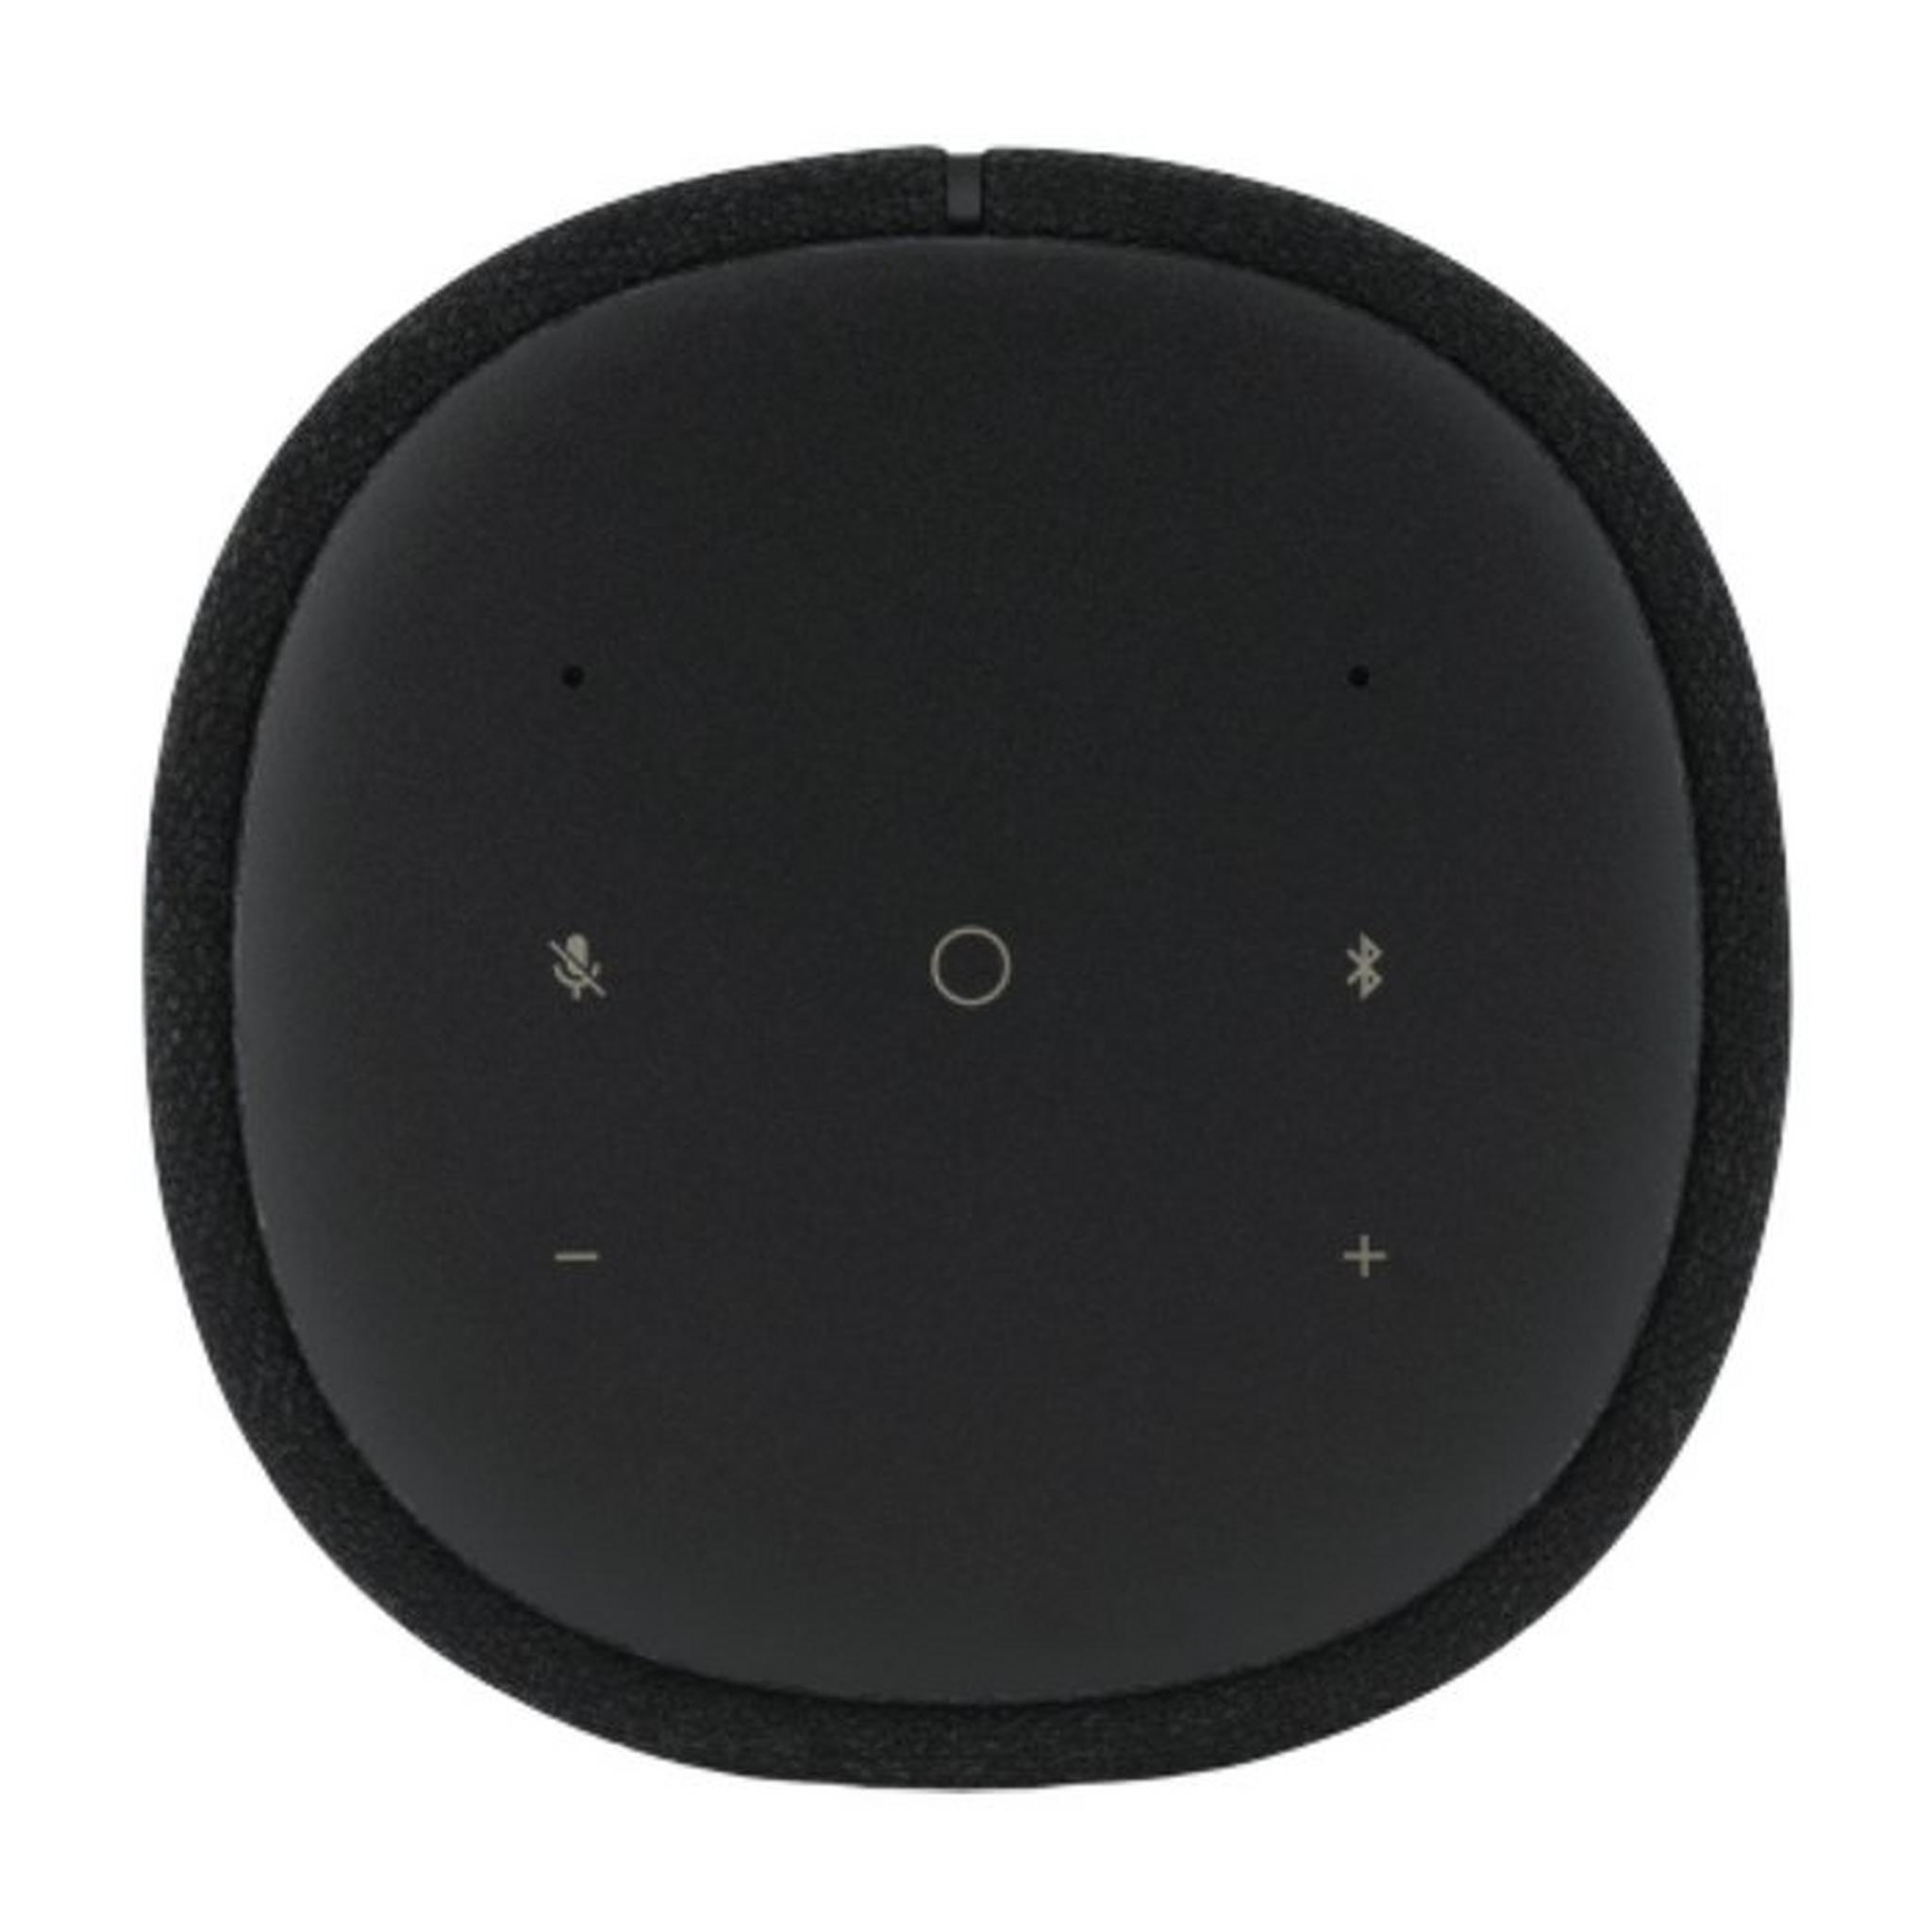 Harman Kardon Citation One Wireless Speaker - Black